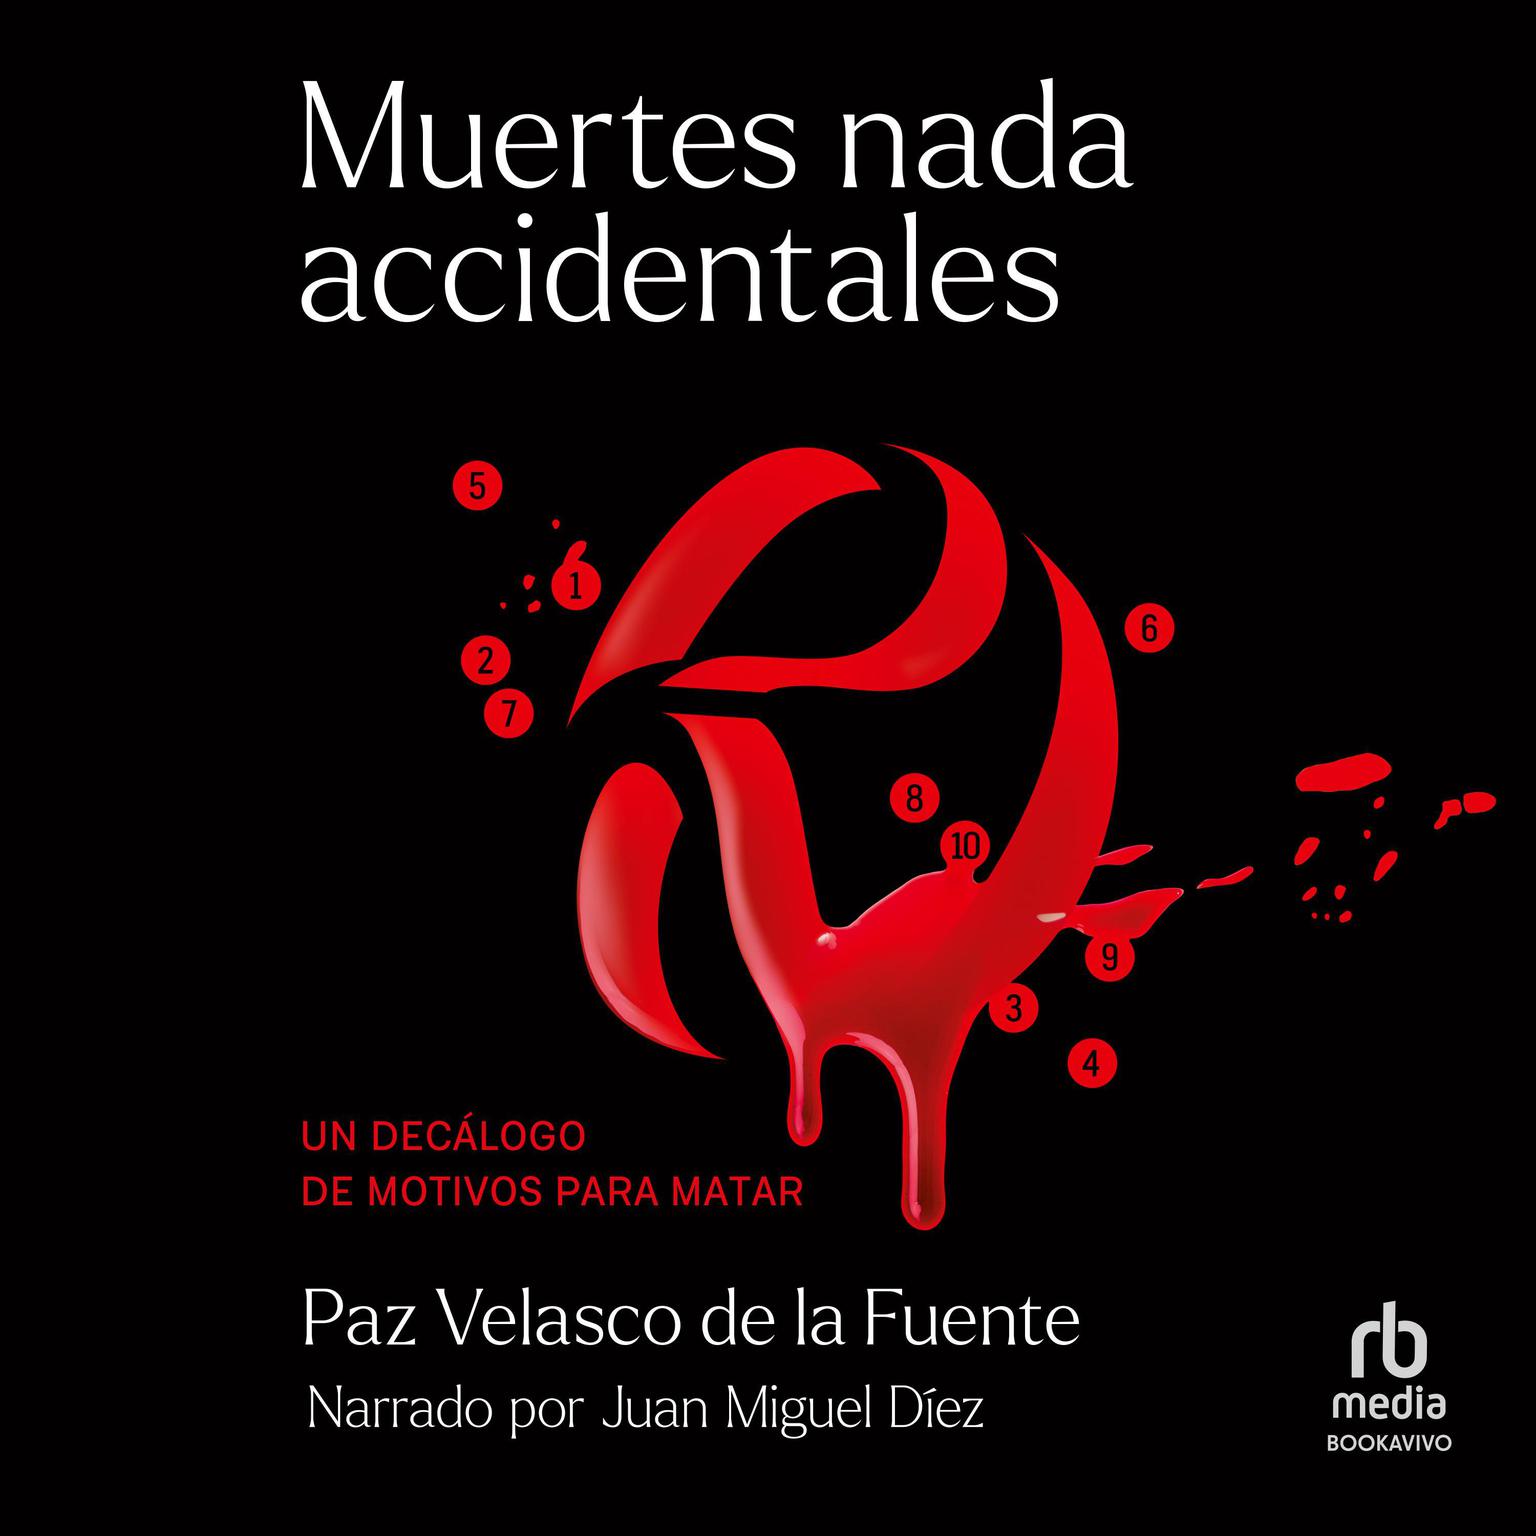 Muertes nada accidentales (Non-accidental Deaths): Un Decálogo de Motivos Para Matar (A Guide to Murder Motives) Audiobook, by Paz Velasco de la Fuente